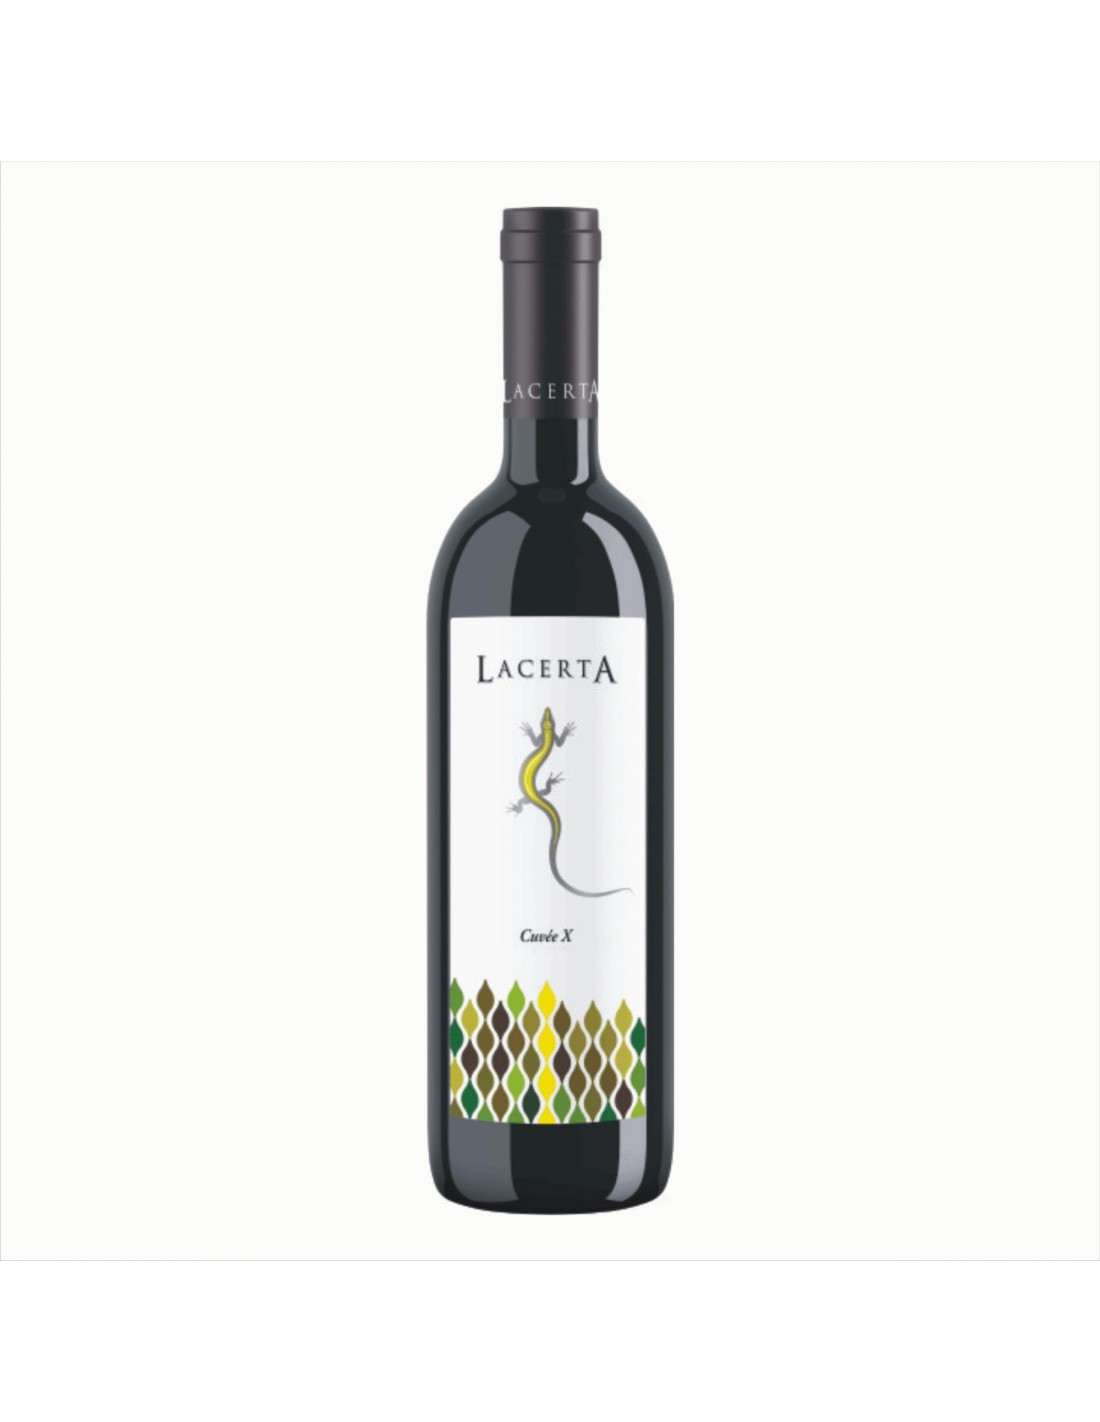 Vin alb, Cupaj, Lacerta Cuvee X Dealu Mare, 2017, 0.75L, 14.4% alc., Romania alcooldiscount.ro